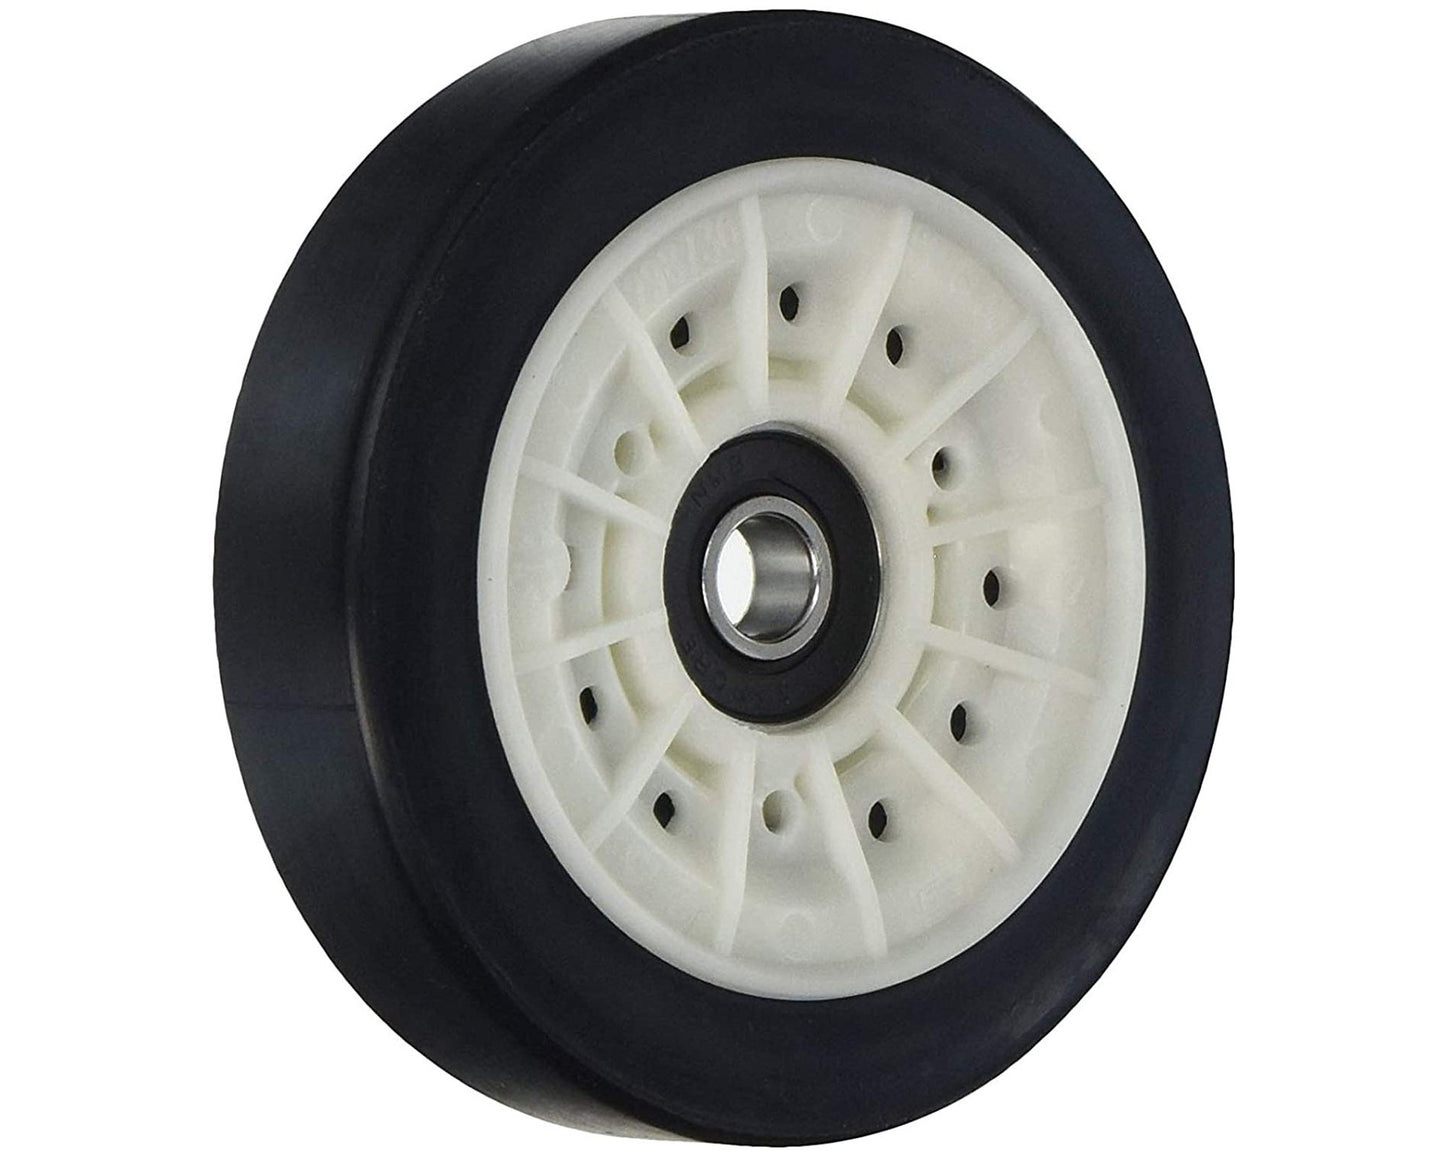 Genuine Blomberg Tumble Dryer Drum Rubber Wheel Roller